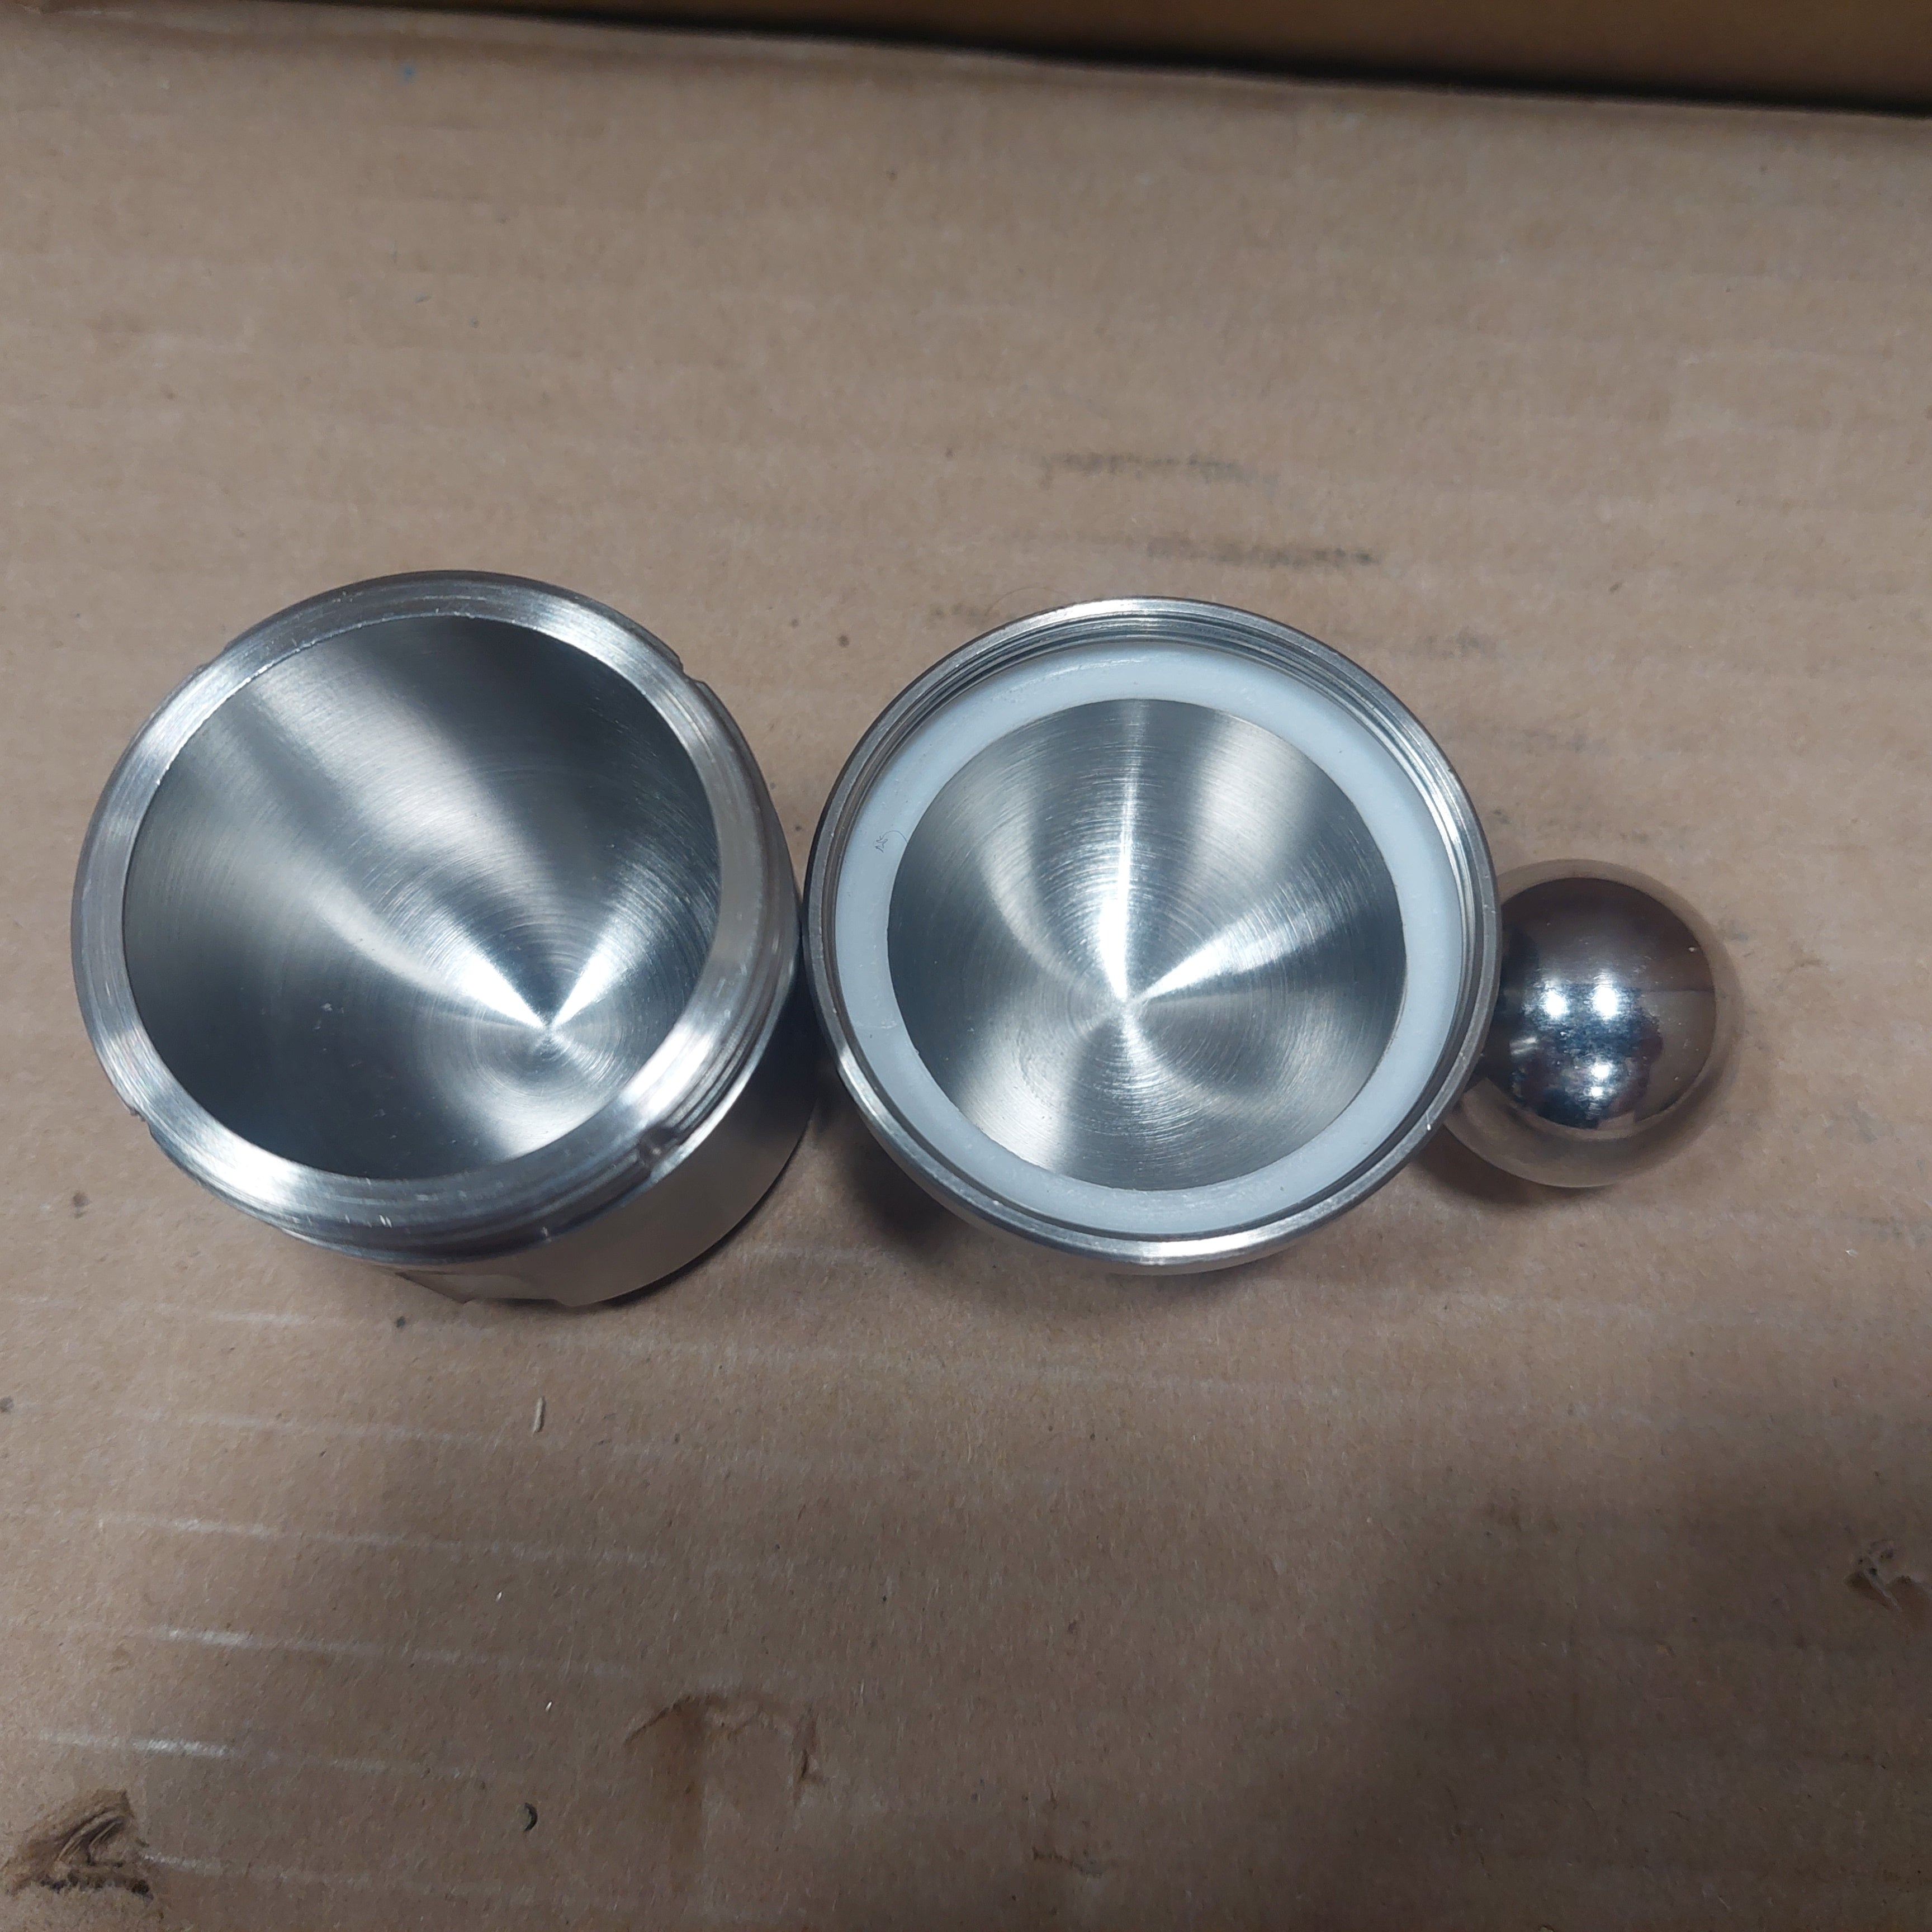 RETSCH 014620216 Grinding Jar, Mixer Ball Stainless Steel 50 mL 1.4112 Used